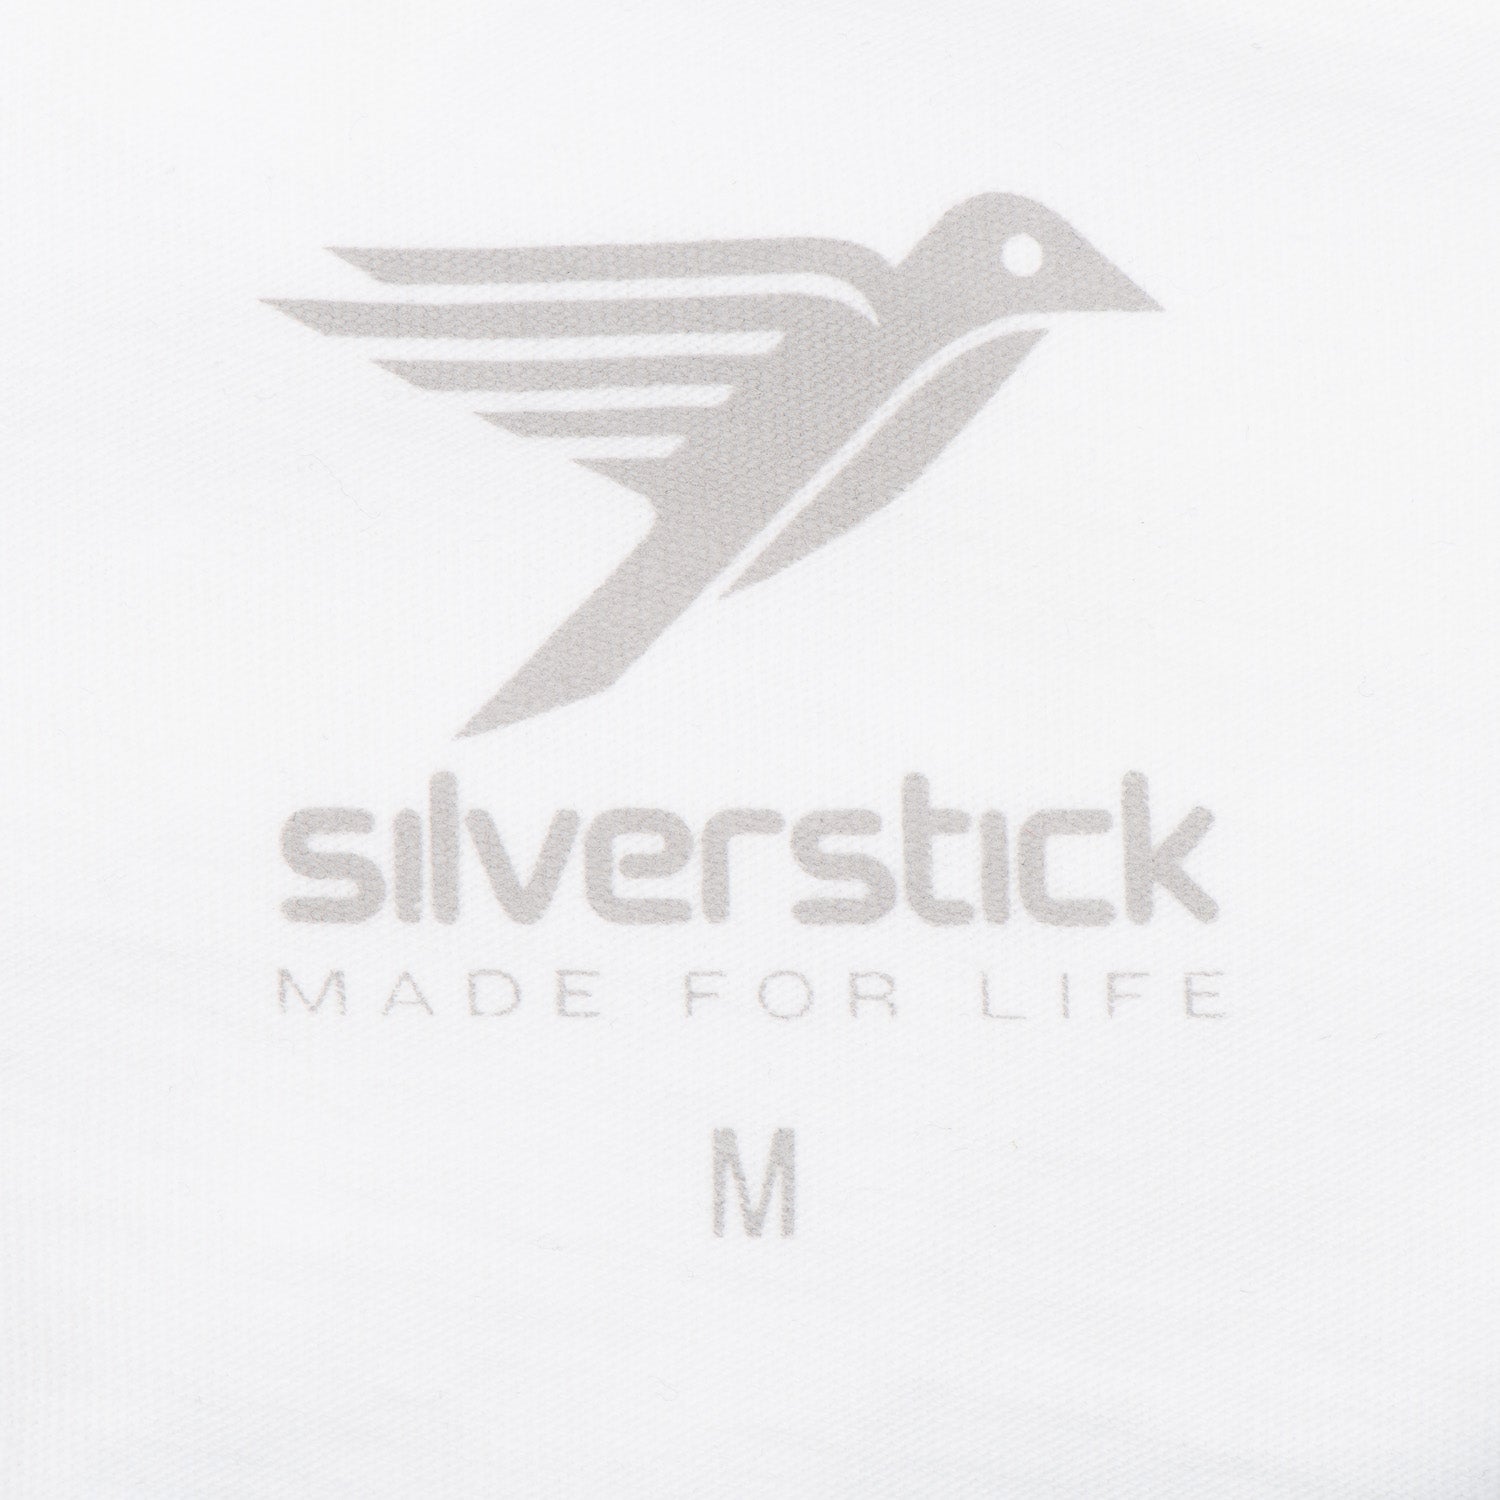 Silverstick Mens Organic Cotton T Shirt Adventure White